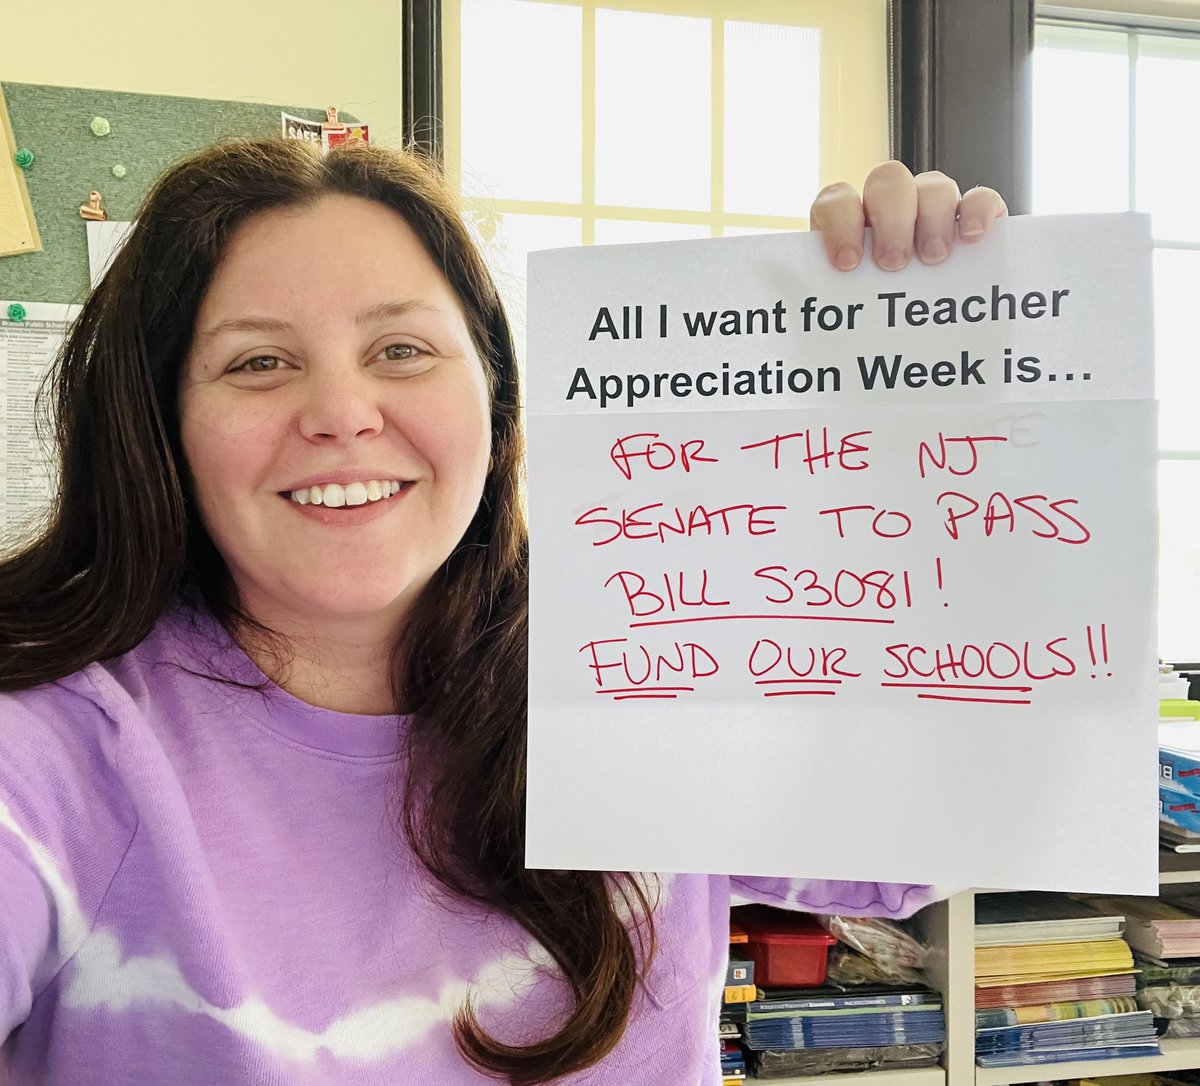 Happy teacher appreciation week! Fully fund our public schools, New Jersey! Pass senate bill S3081!  @govmurphy @philmurphy @SenPresScutari @PaulASarlo @NJEA @NJEA_CC #TeacherAppreciationWeek #FundOurSchools #LBSEAstrong